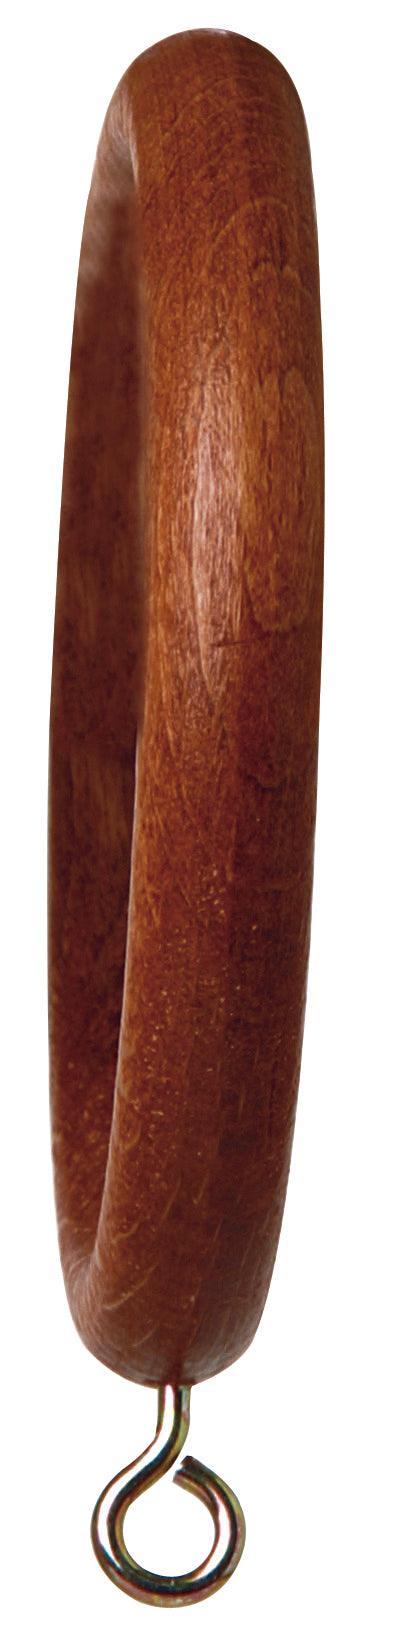 Ring Wood w/eye W 1-3/16" - Alan Richard Textiles, LTD Zabala 1-3/16" 2000 Wood & Maderas Wood